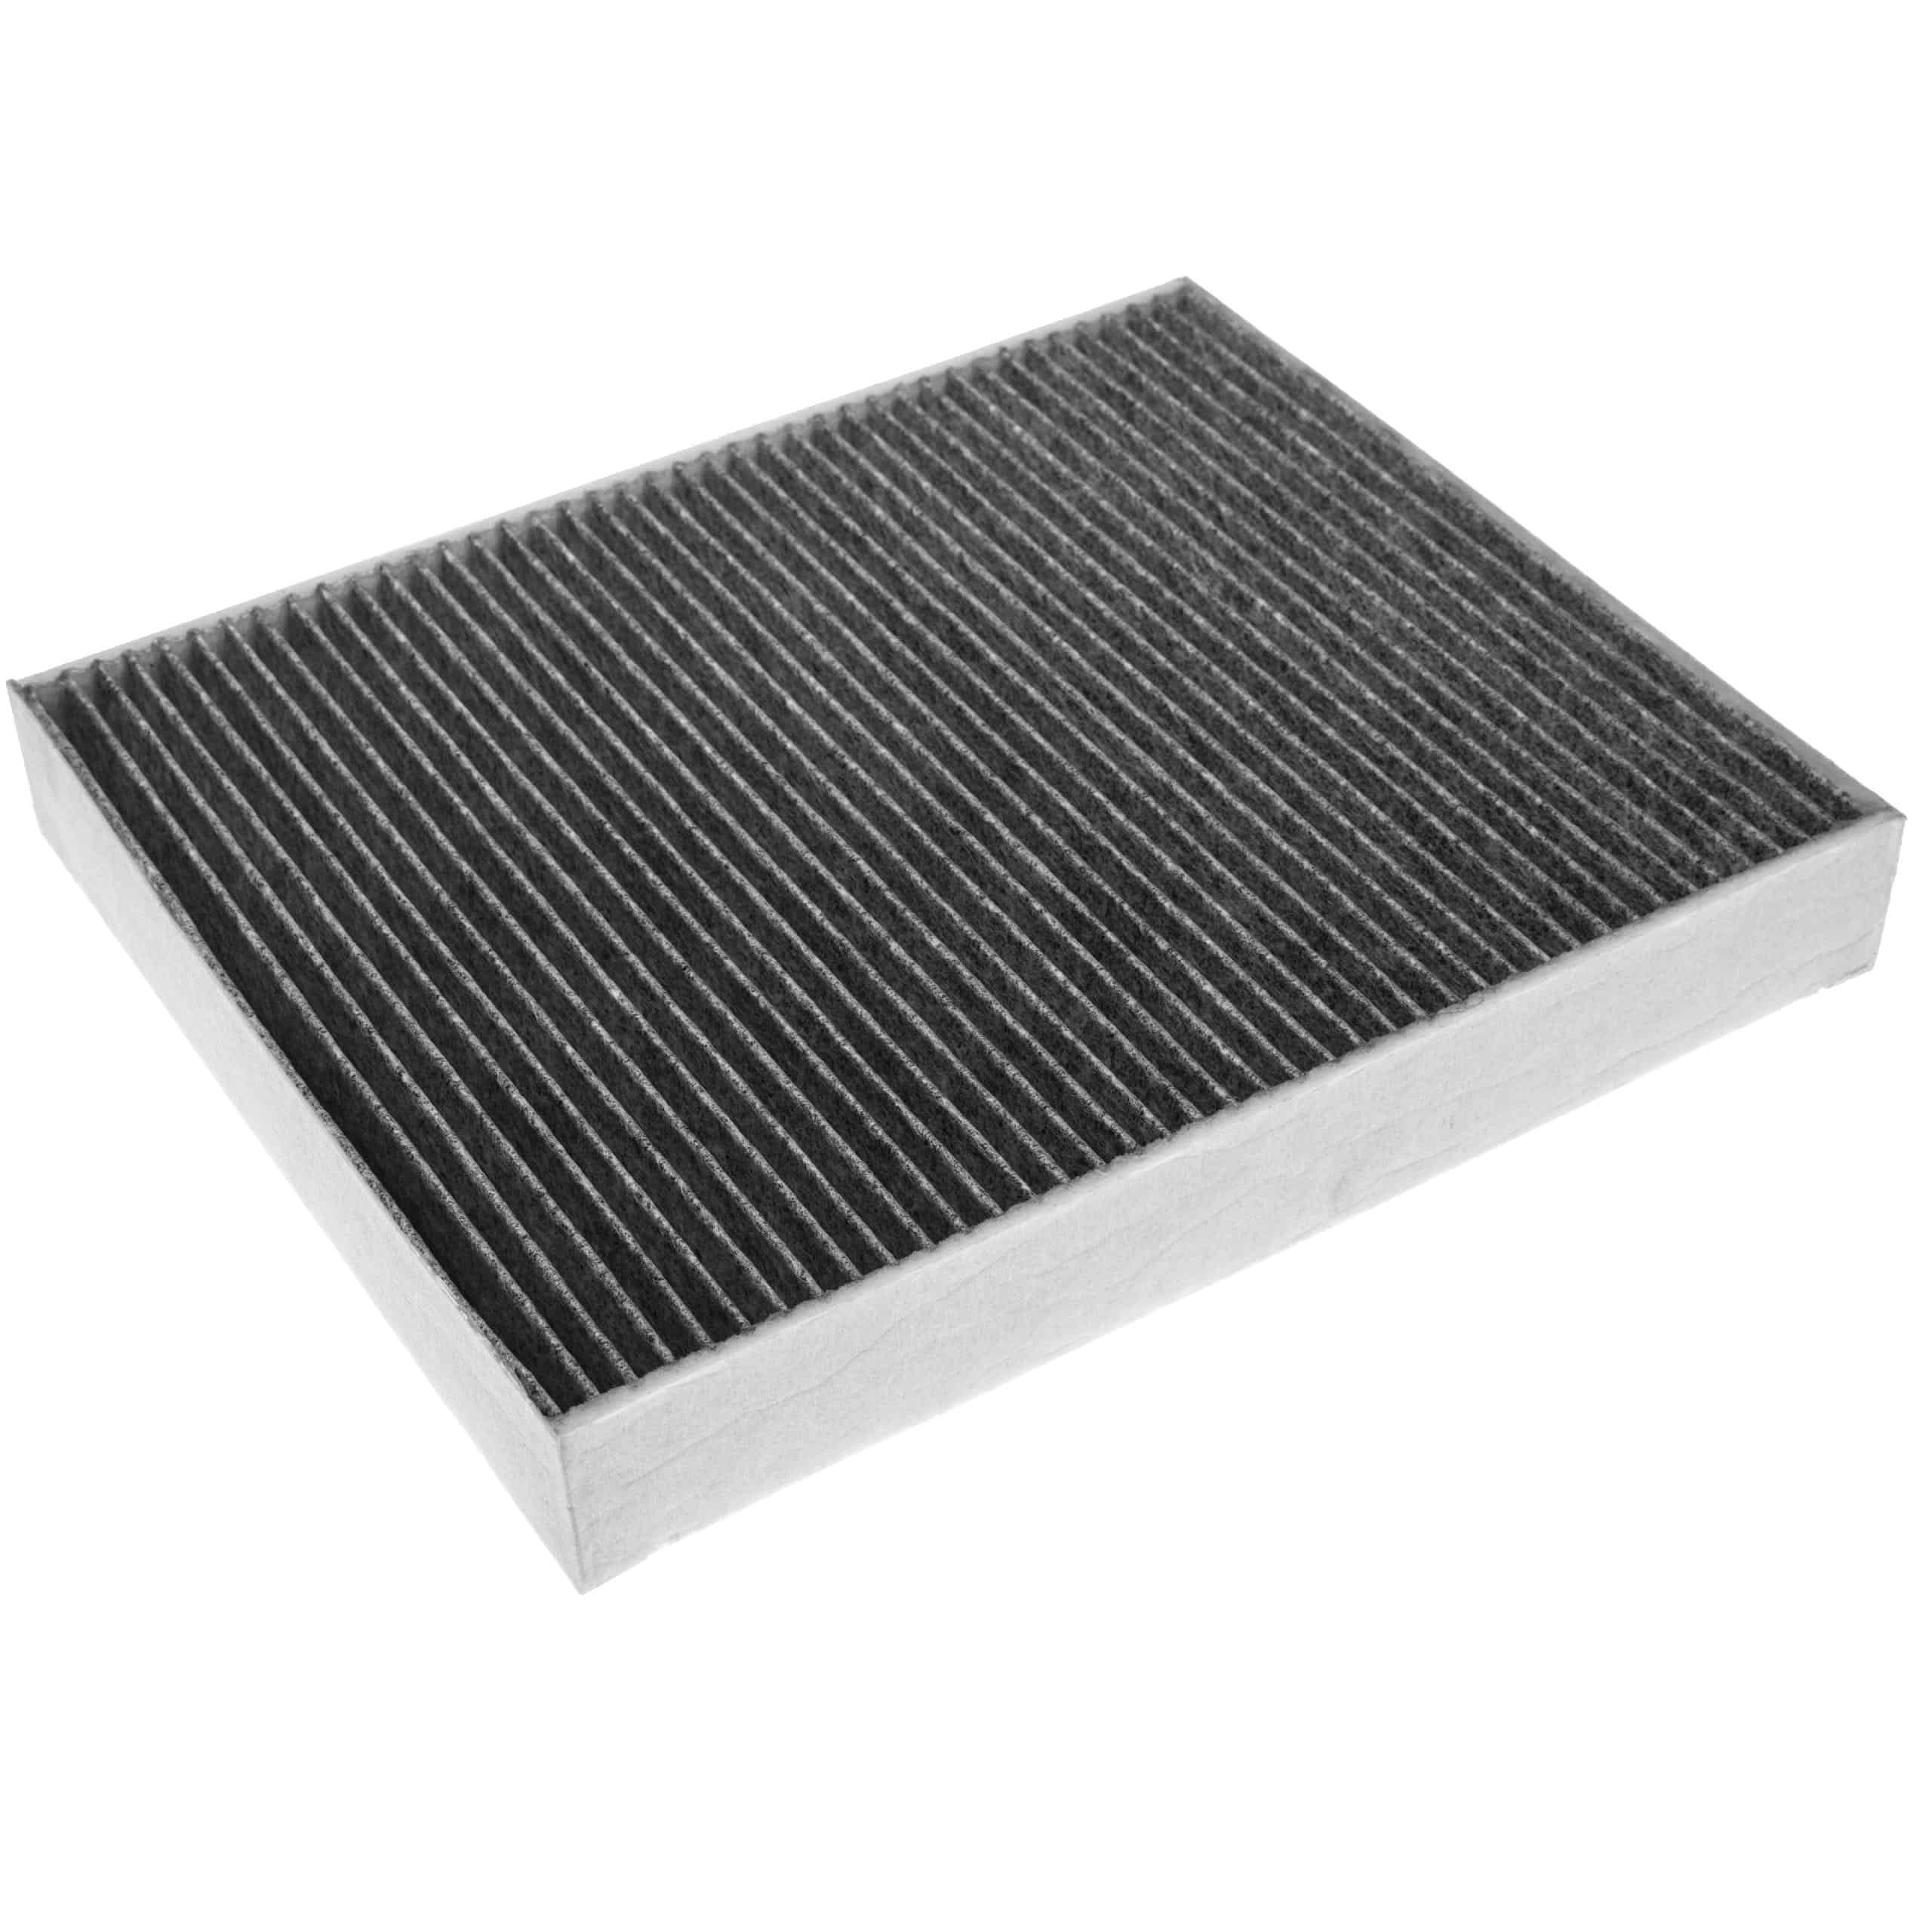 Filtro reemplaza Stadler Form R-114 - HEPA (H12) + carbón activo, 32,4 x 27 x 4,35 cm